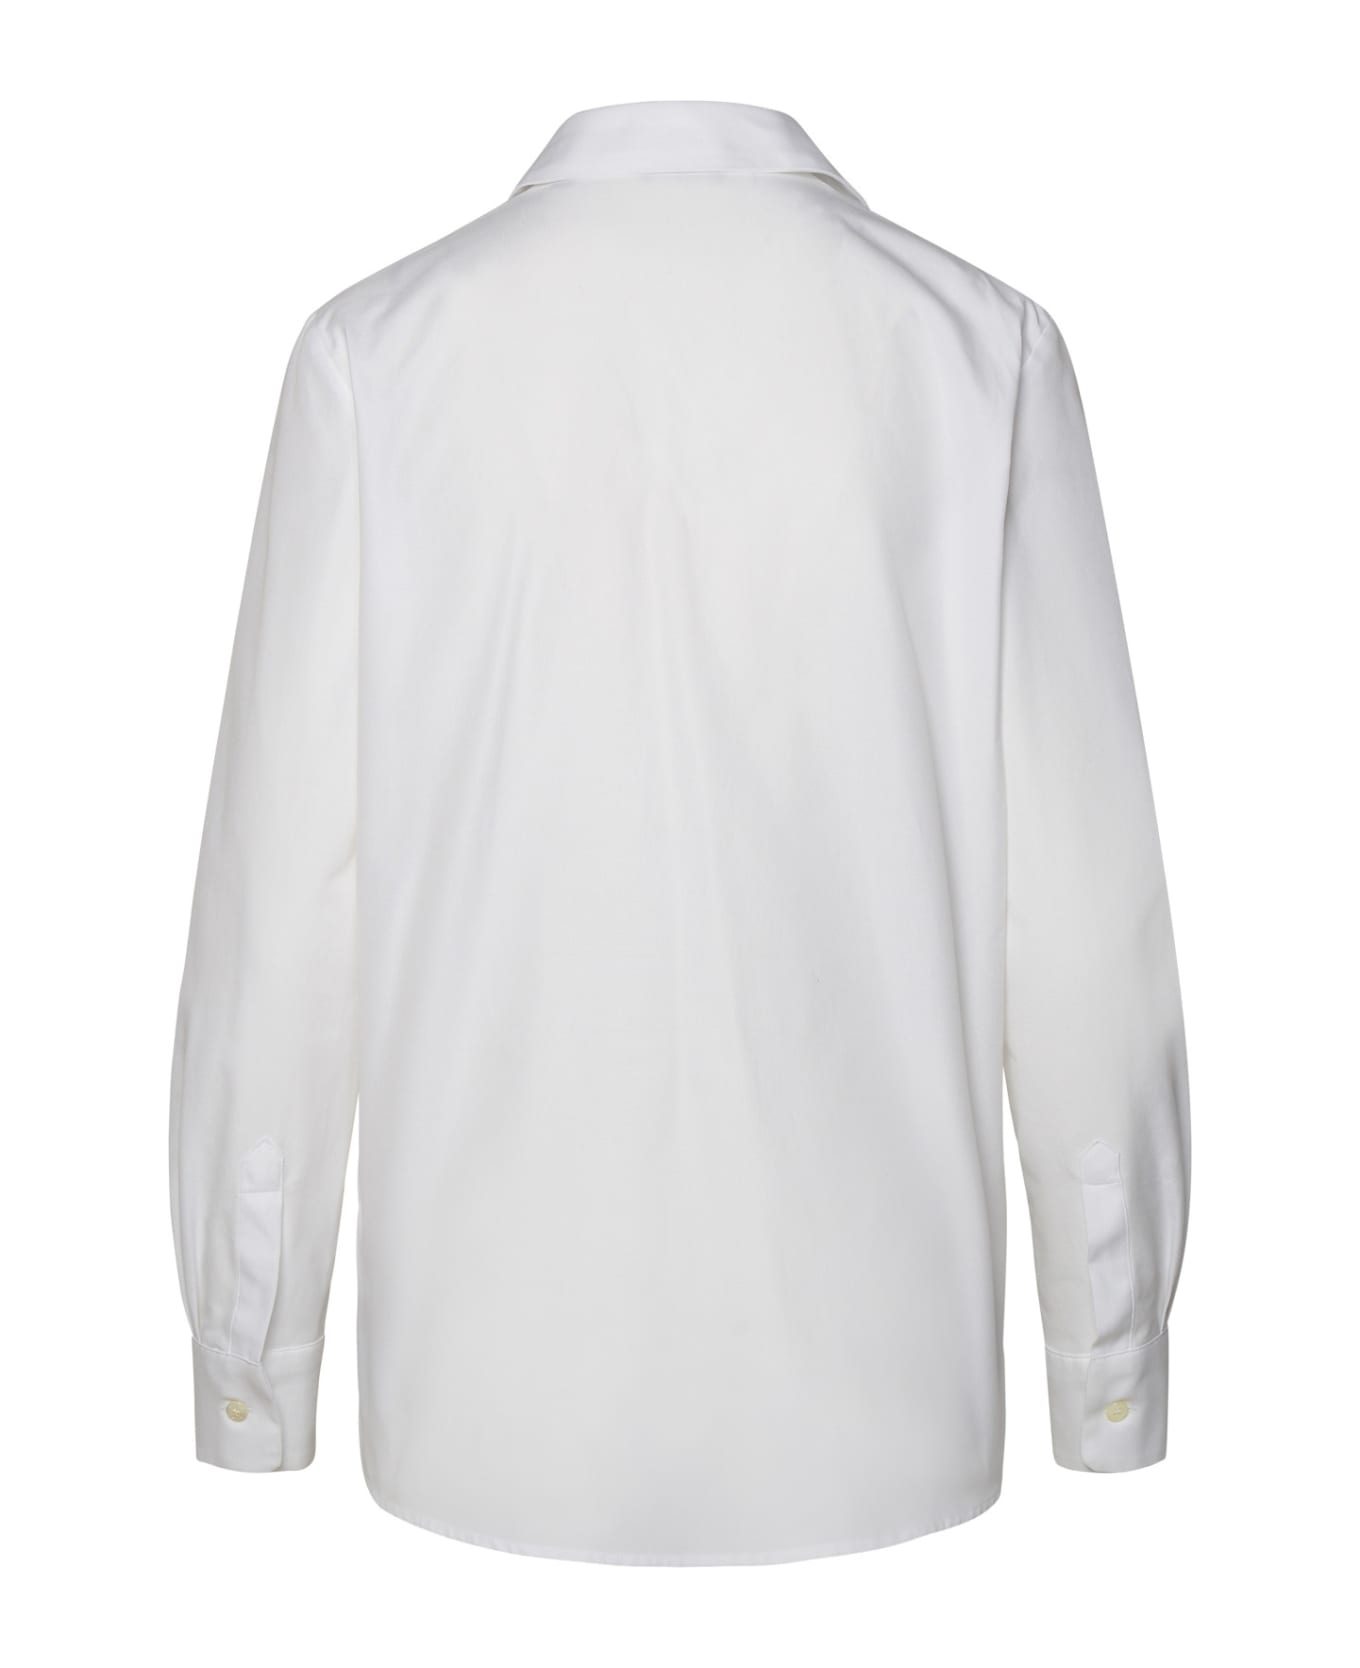 Etro White Cotton Shirt - BIANCO OTTICO (White)